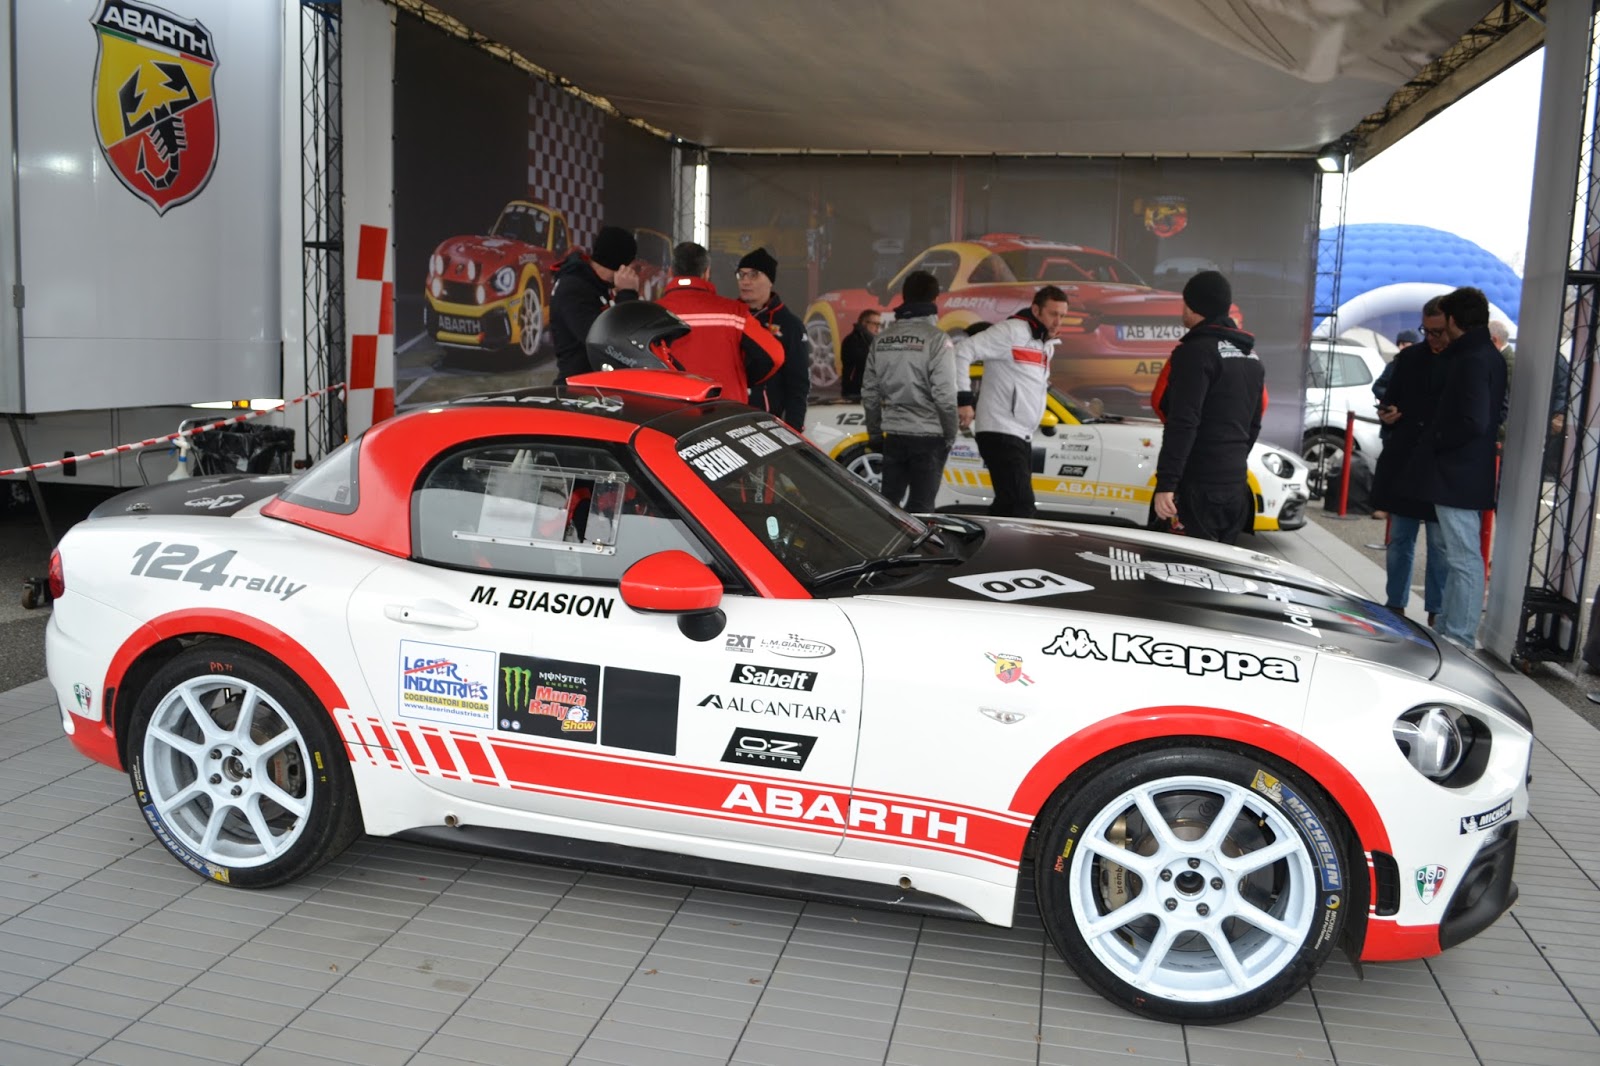 161215 Abarth Trofei 2017 01 Θετική παρουσία για το Abarth 124 rally στην αγωνιστική του πρεμιέρα στο 85ο Rally του Monte Carlo